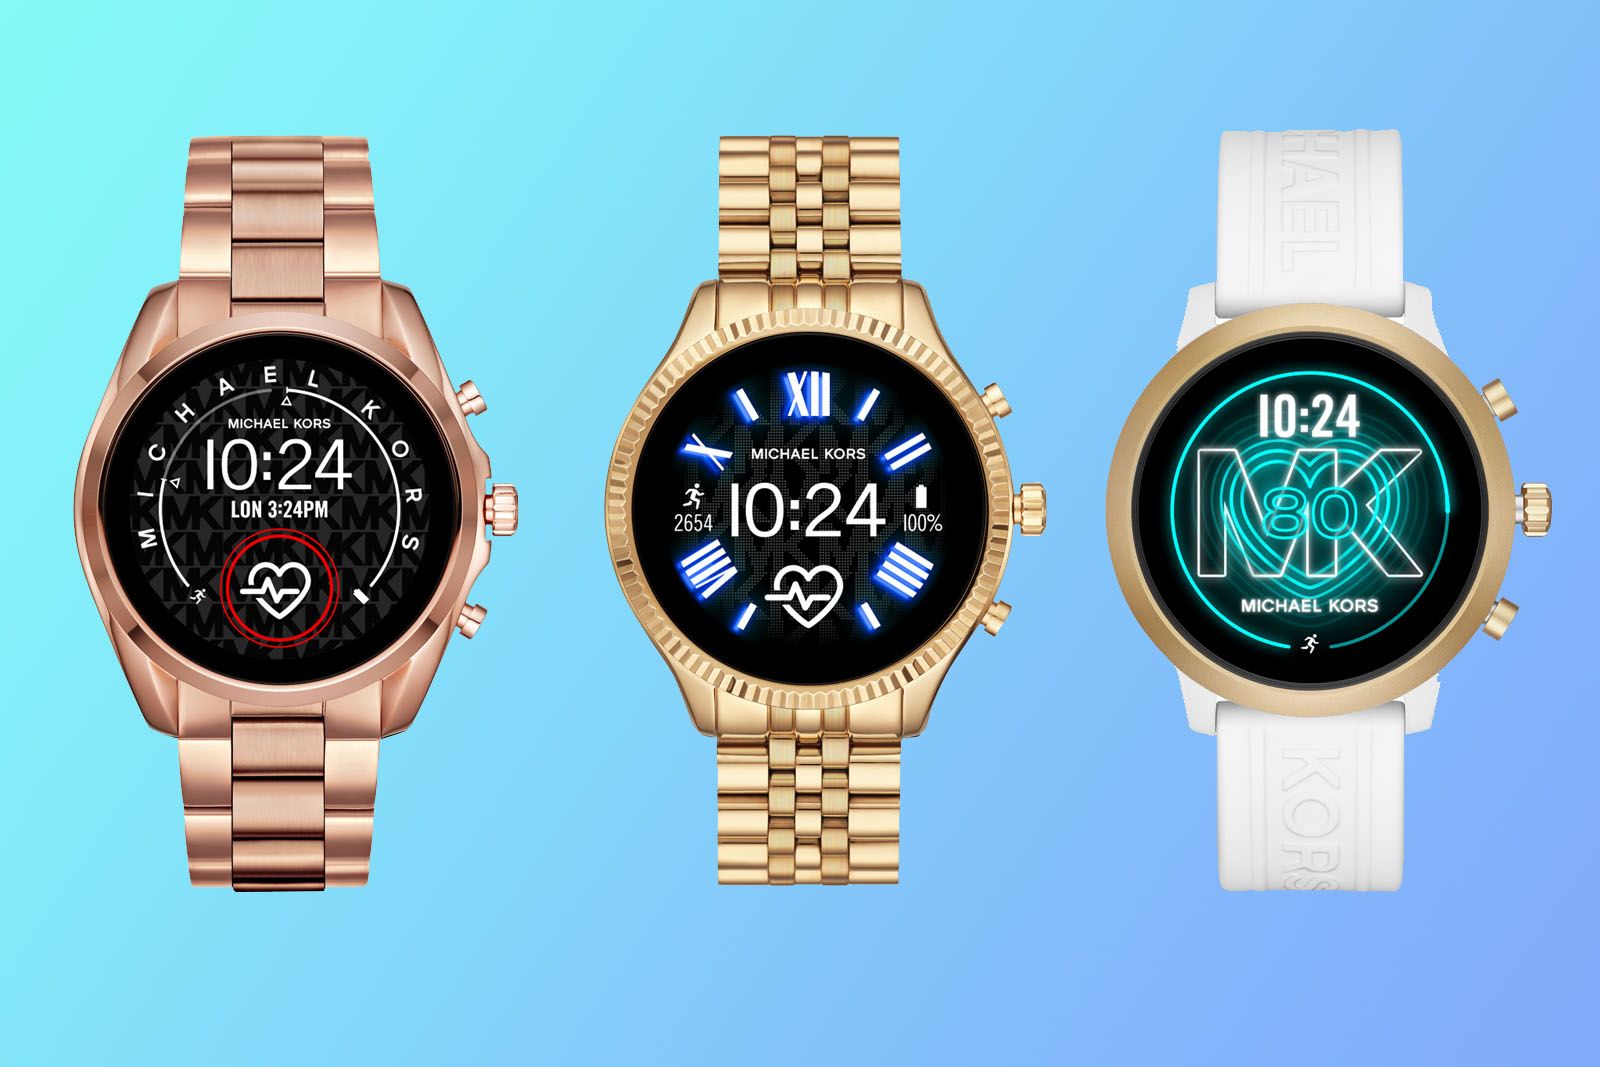 Michael Kors expands smartwatch portfolio with Access Bradshaw 2, Lexington  2 and sporty MKGO